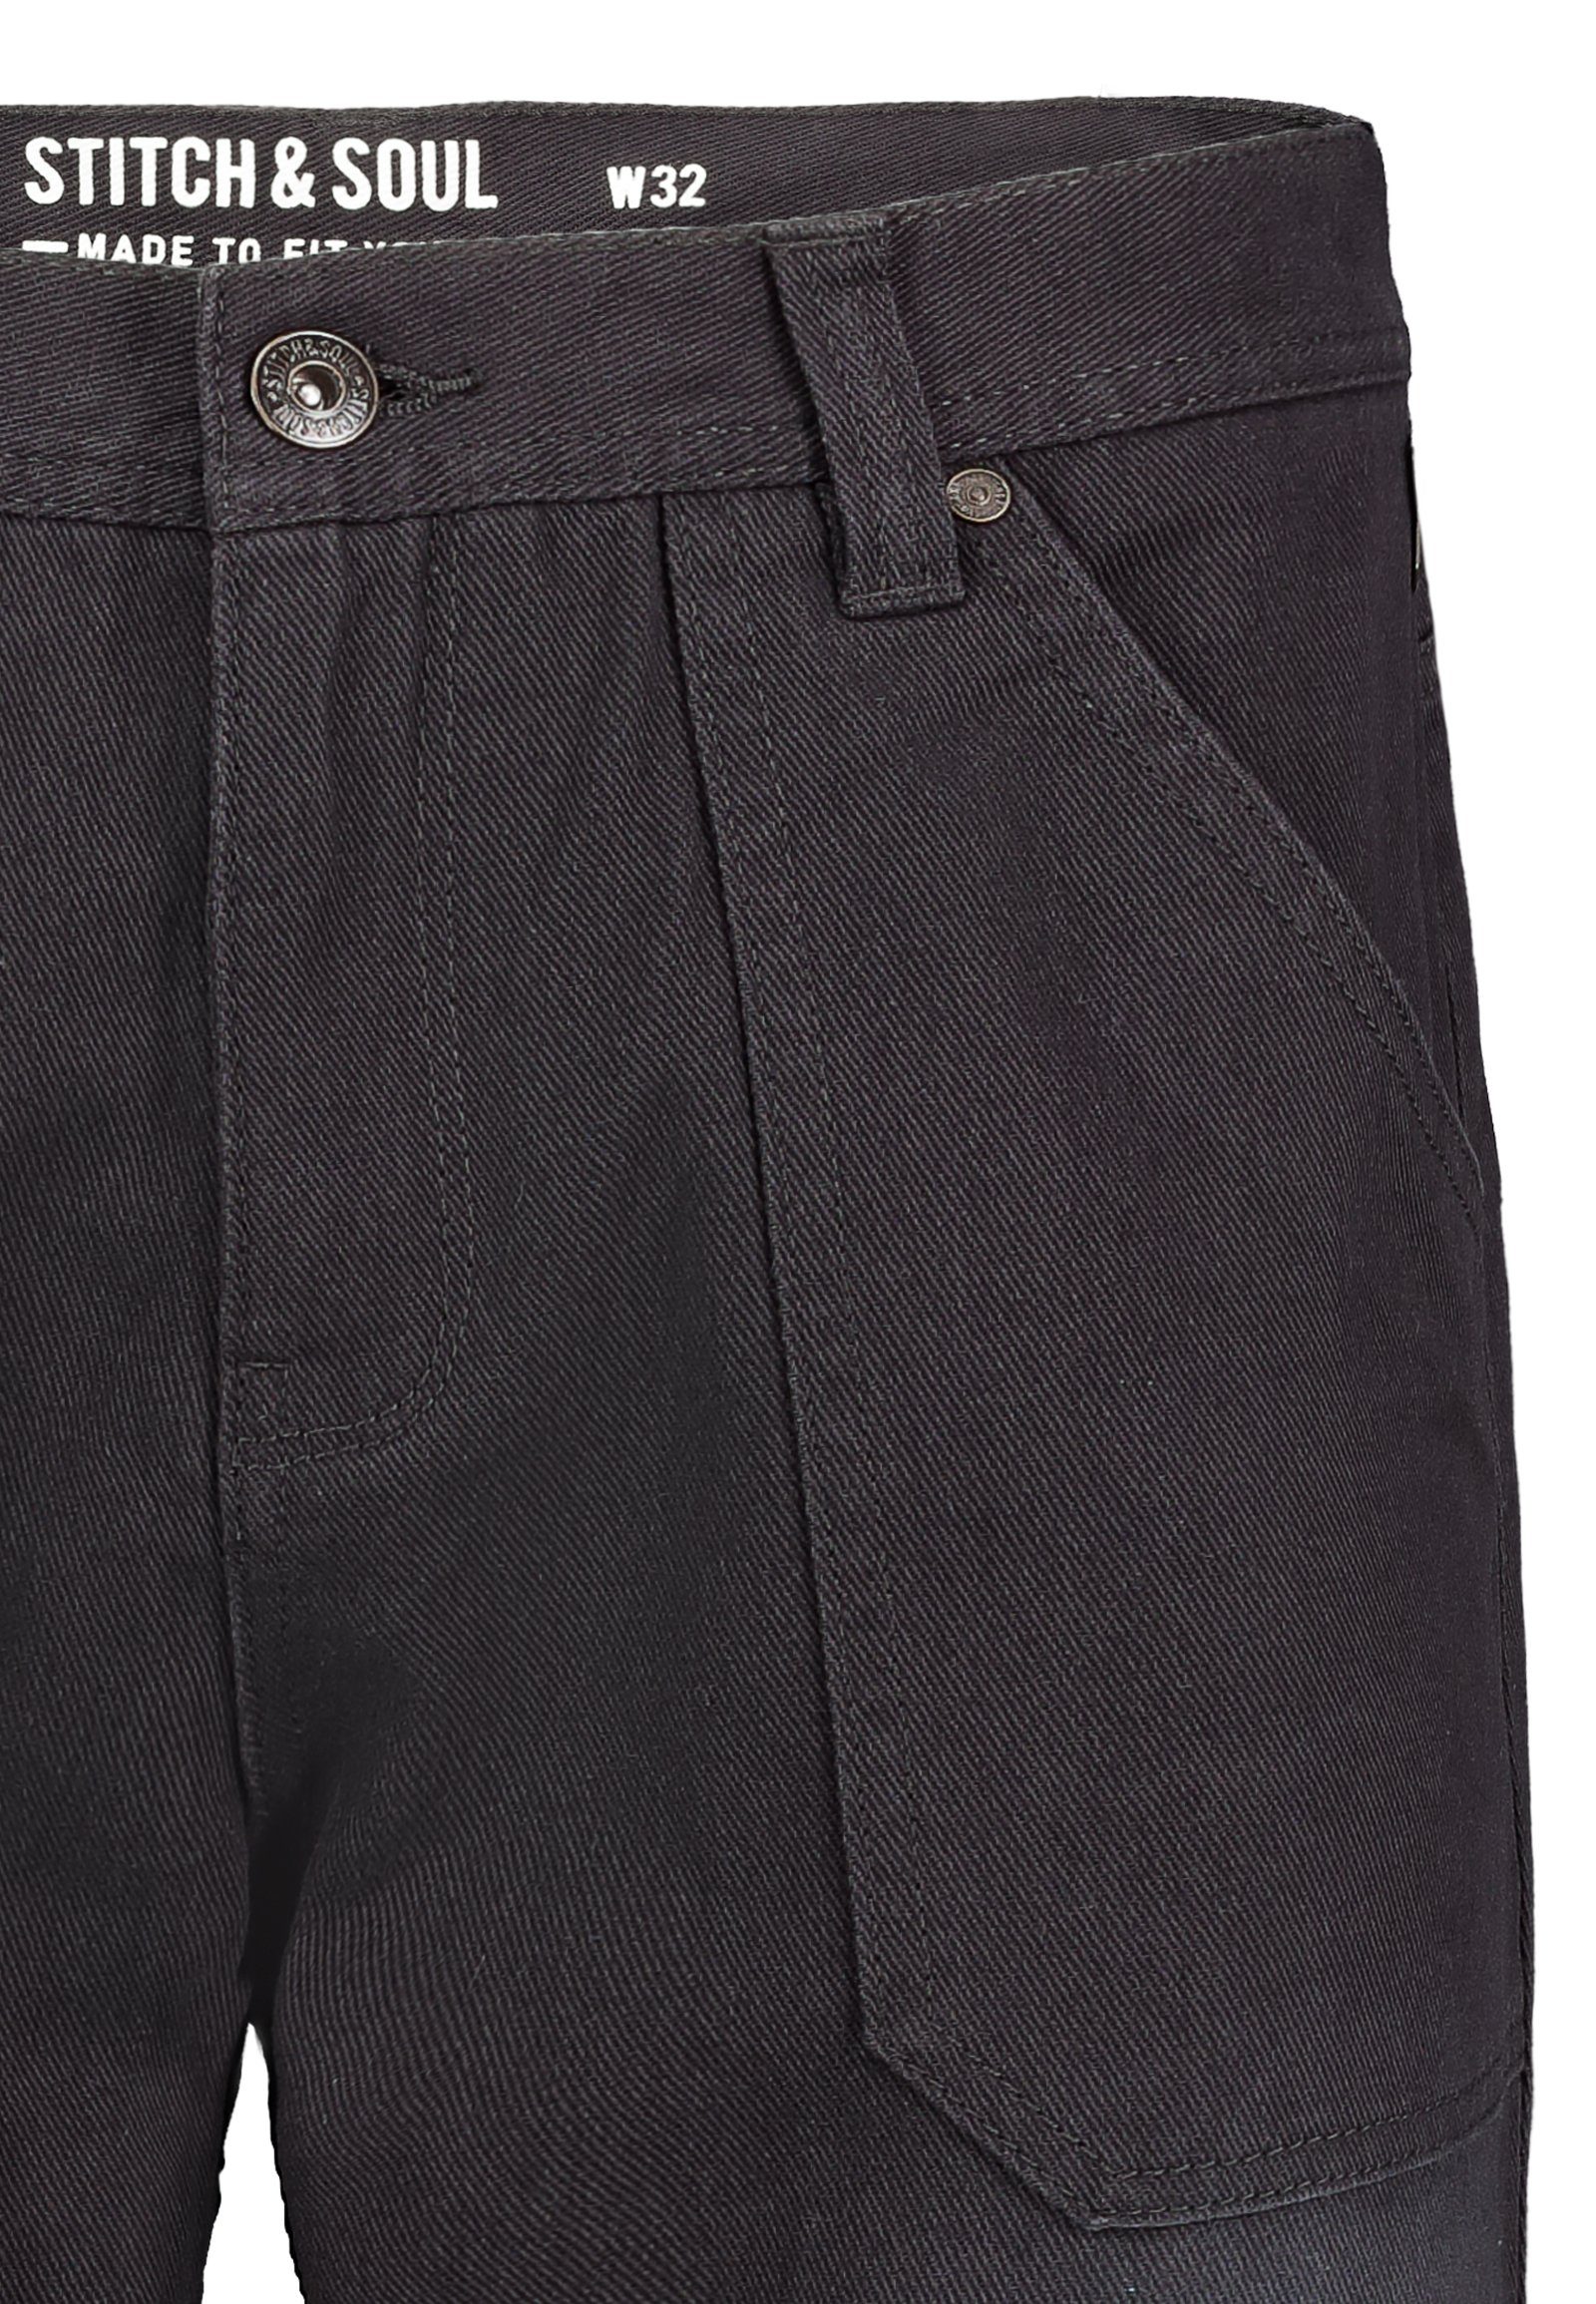 Stitch Wide Loose-fit-Jeans & Jeans Leg dark-grey Soul